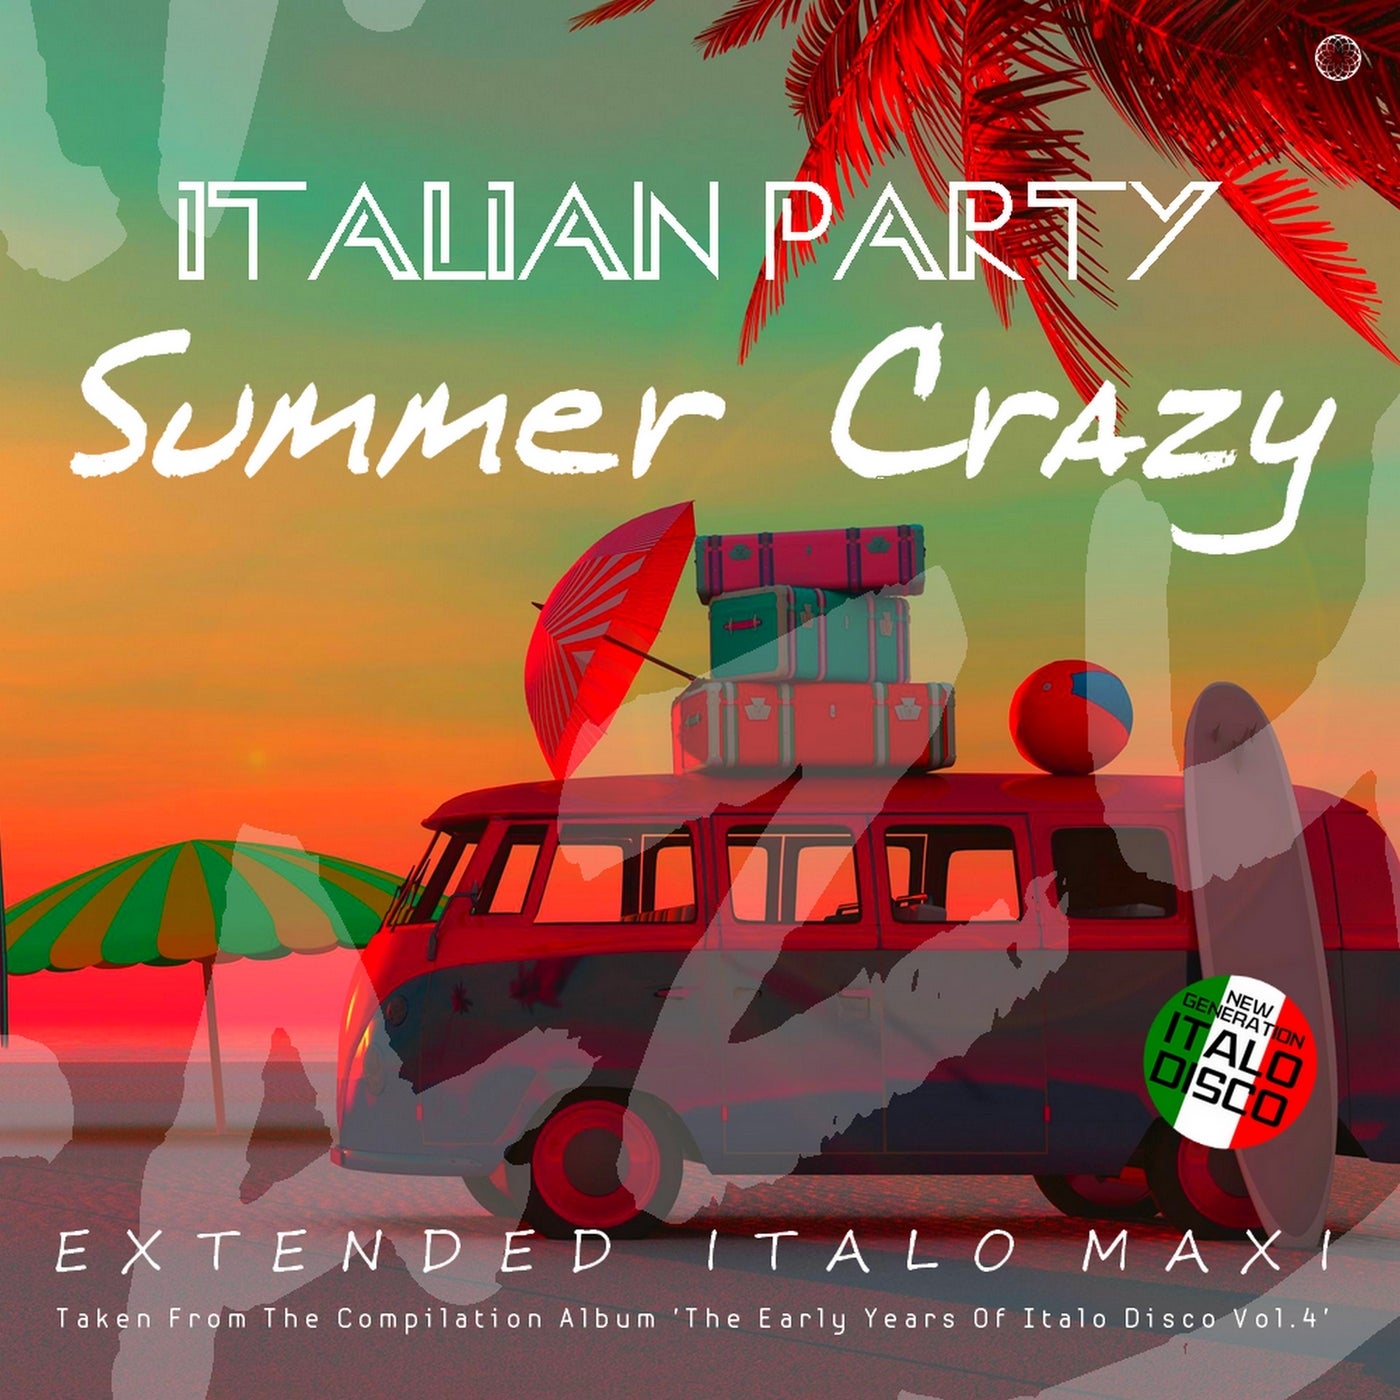 Crazy summer dance. Италиан пати. Сумасшедшее лето. Italian Party Summer Love. Italian Party Summer lovers 2022.